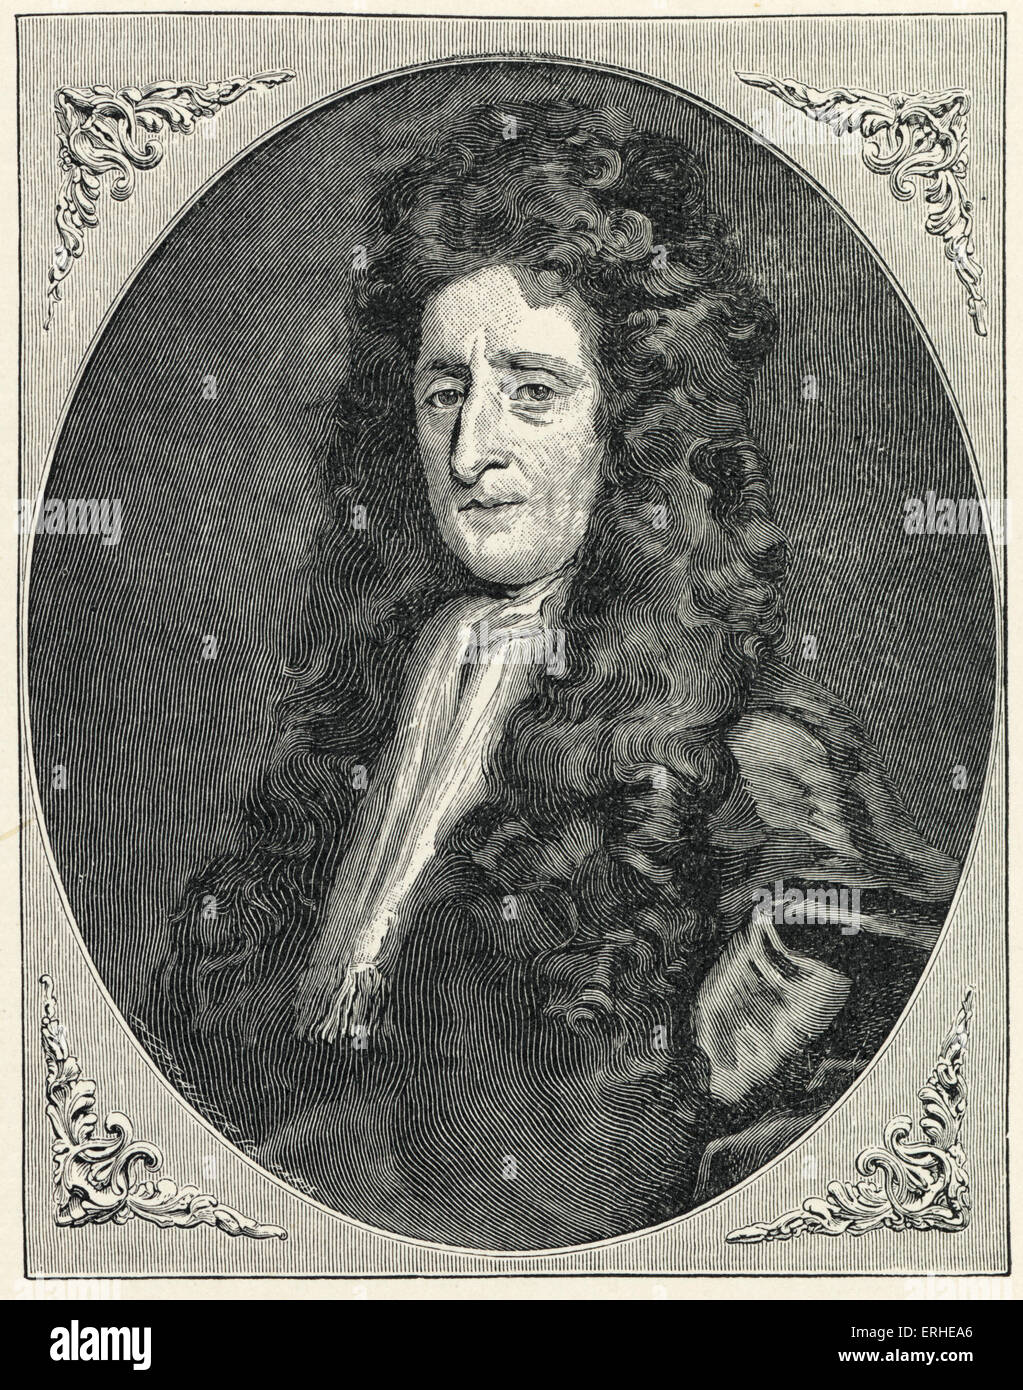 John Locke - Retrato grabado por Burrower después del retrato. Filósofo inglés 1632 - 1704 Foto de stock